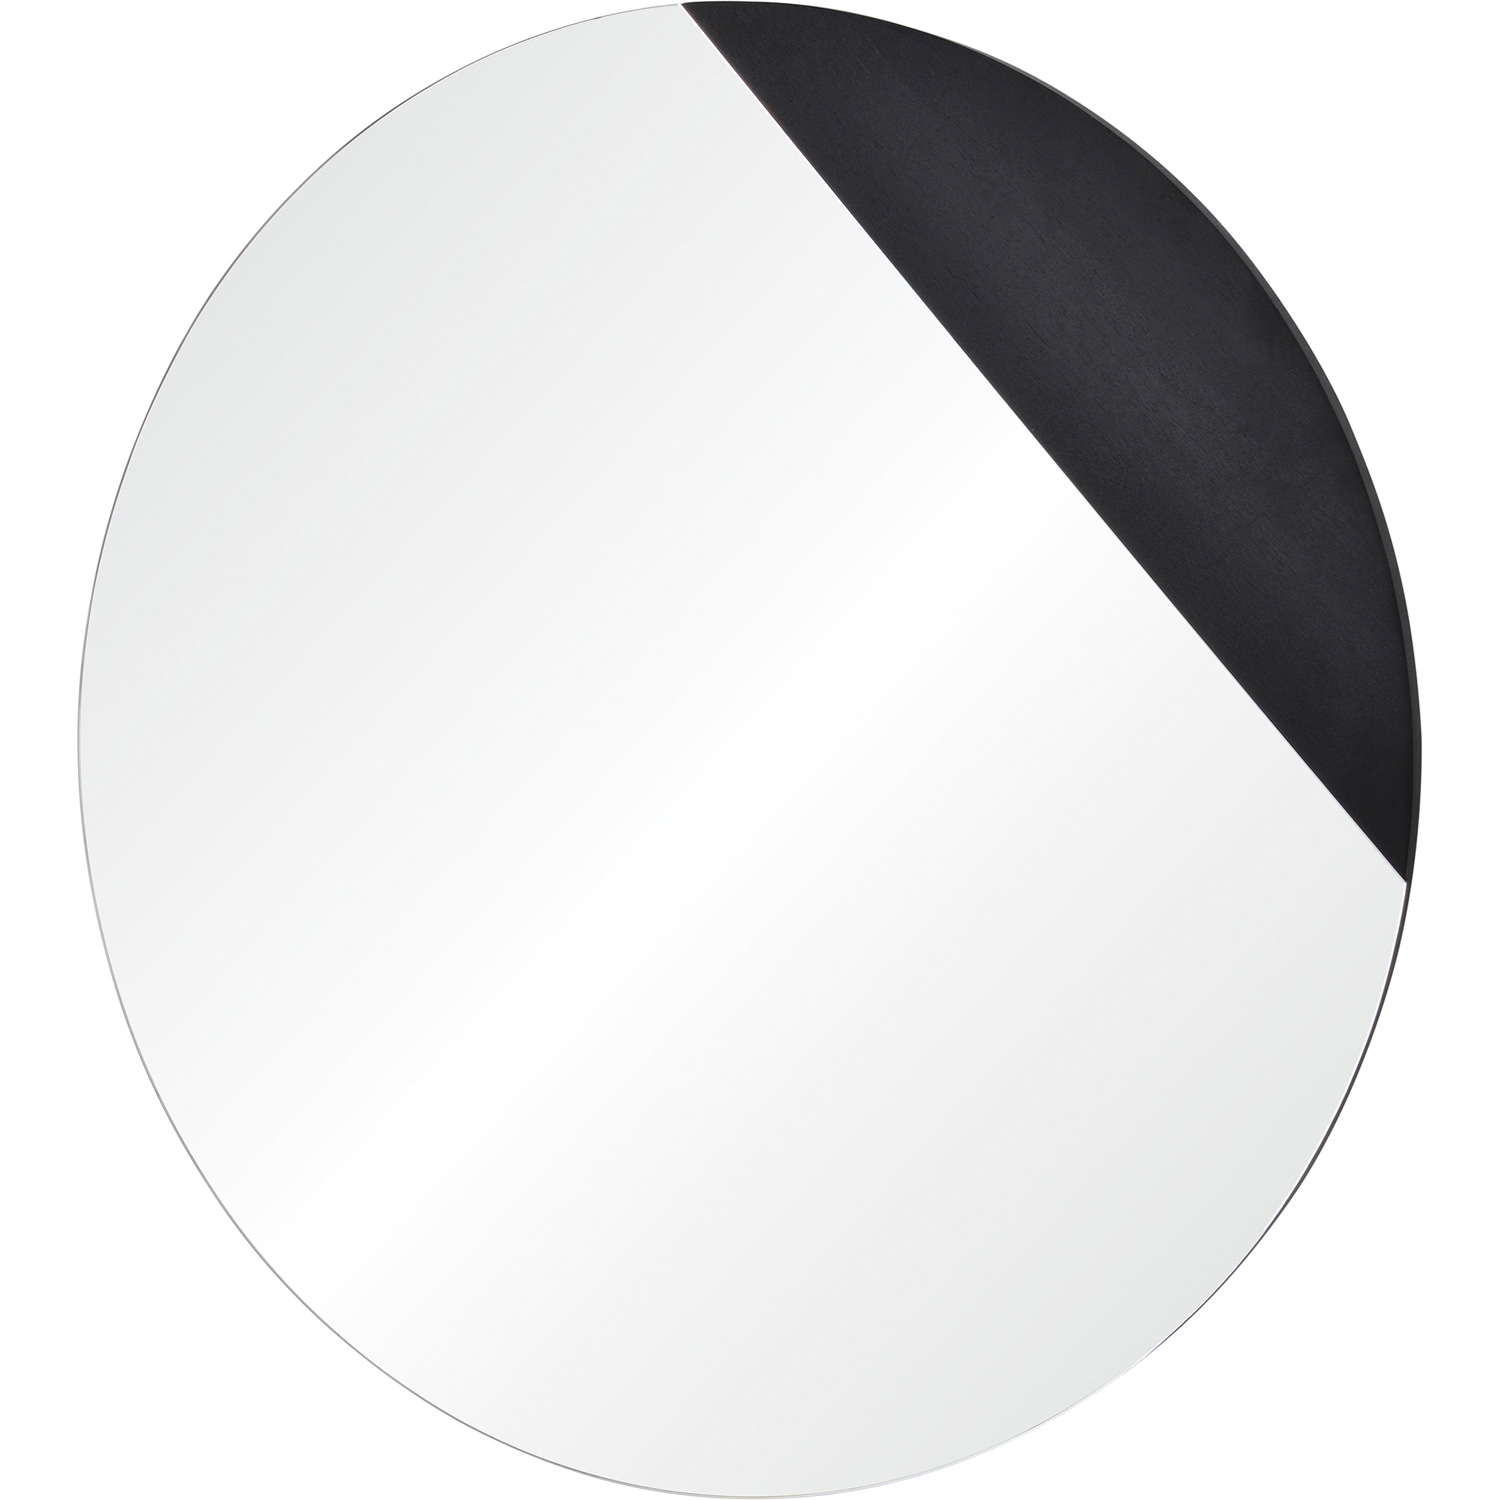 Ren-Wil Aver Round Mirror - Black Veneer